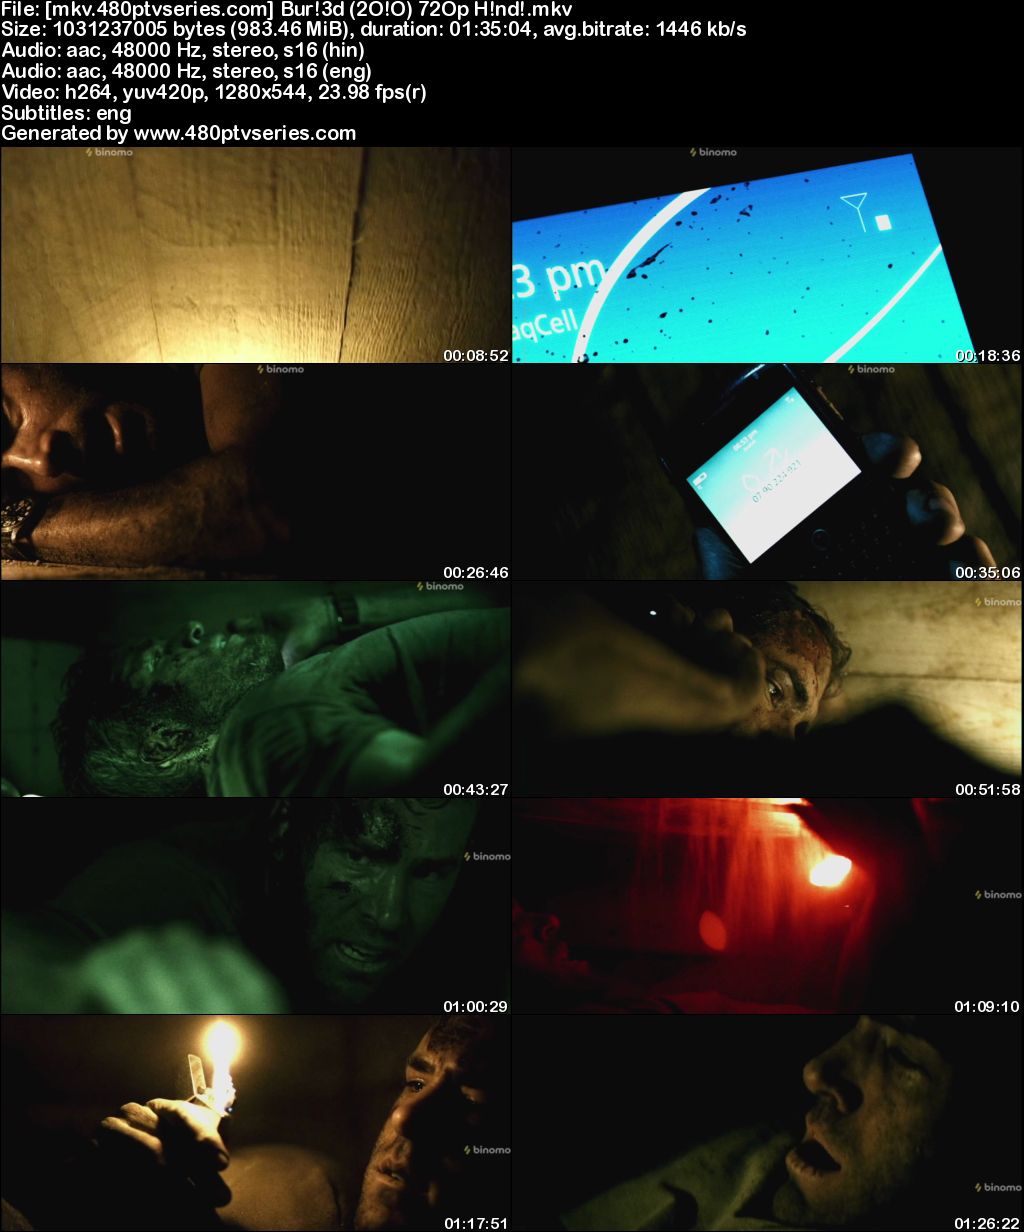 Watch Online Free Buried (2010) Full Hindi Dual Audio Movie Download 480p 720p Bluray